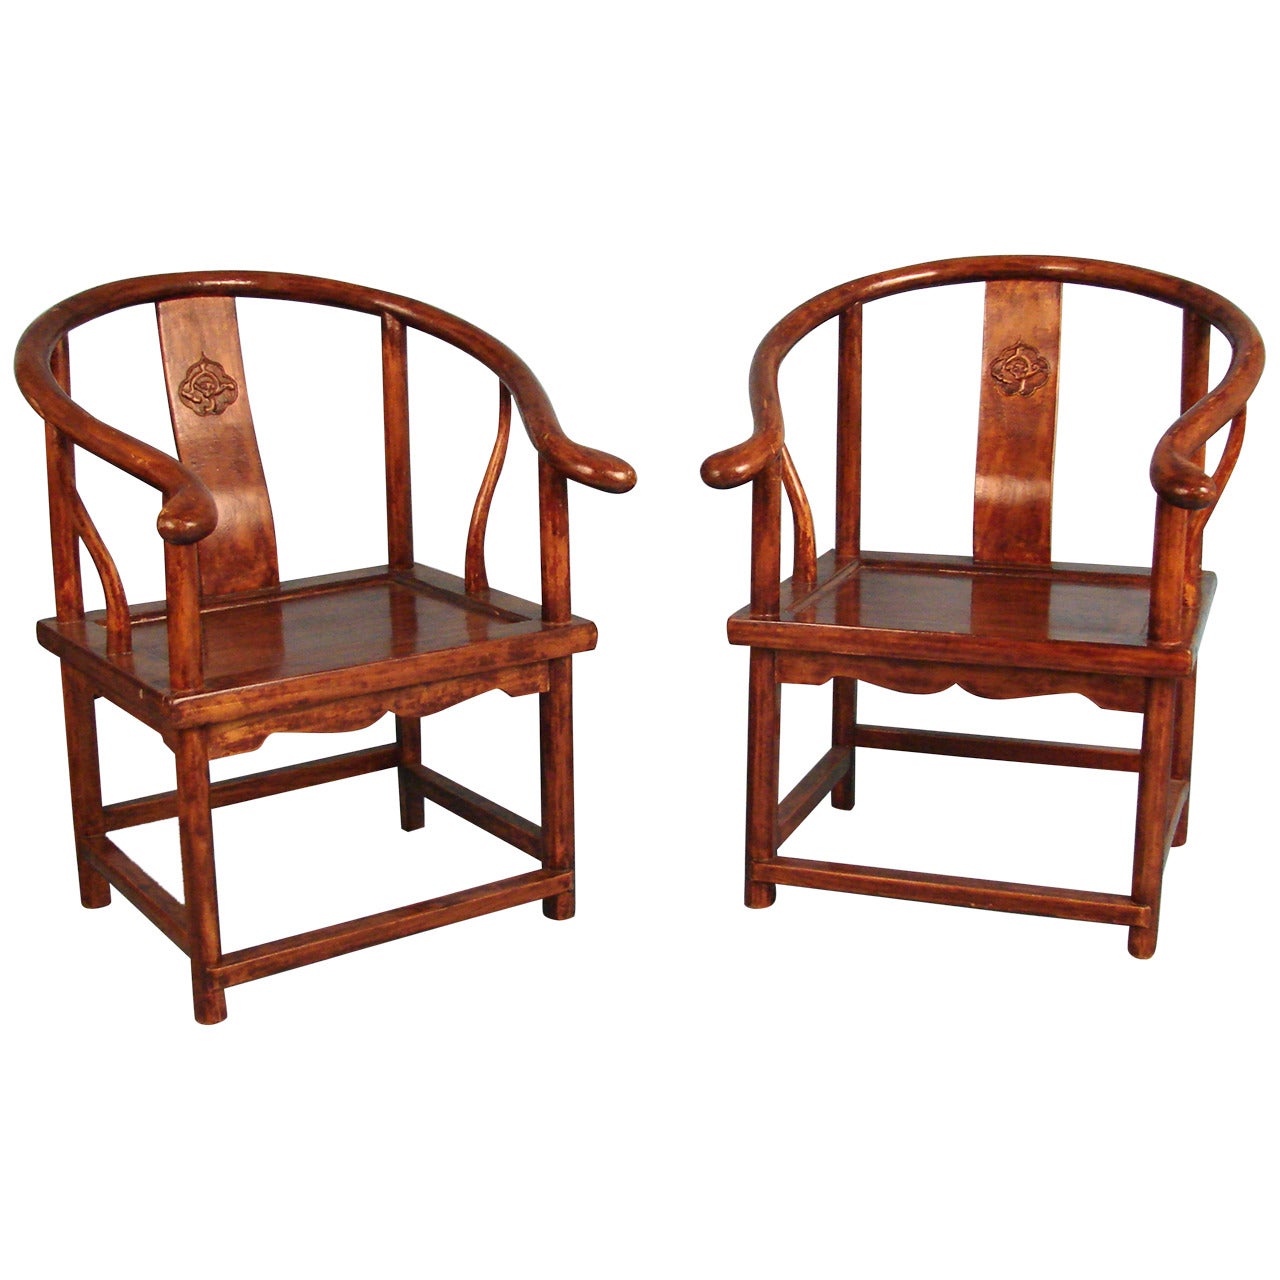 Pair of Chinese Child's Chairs